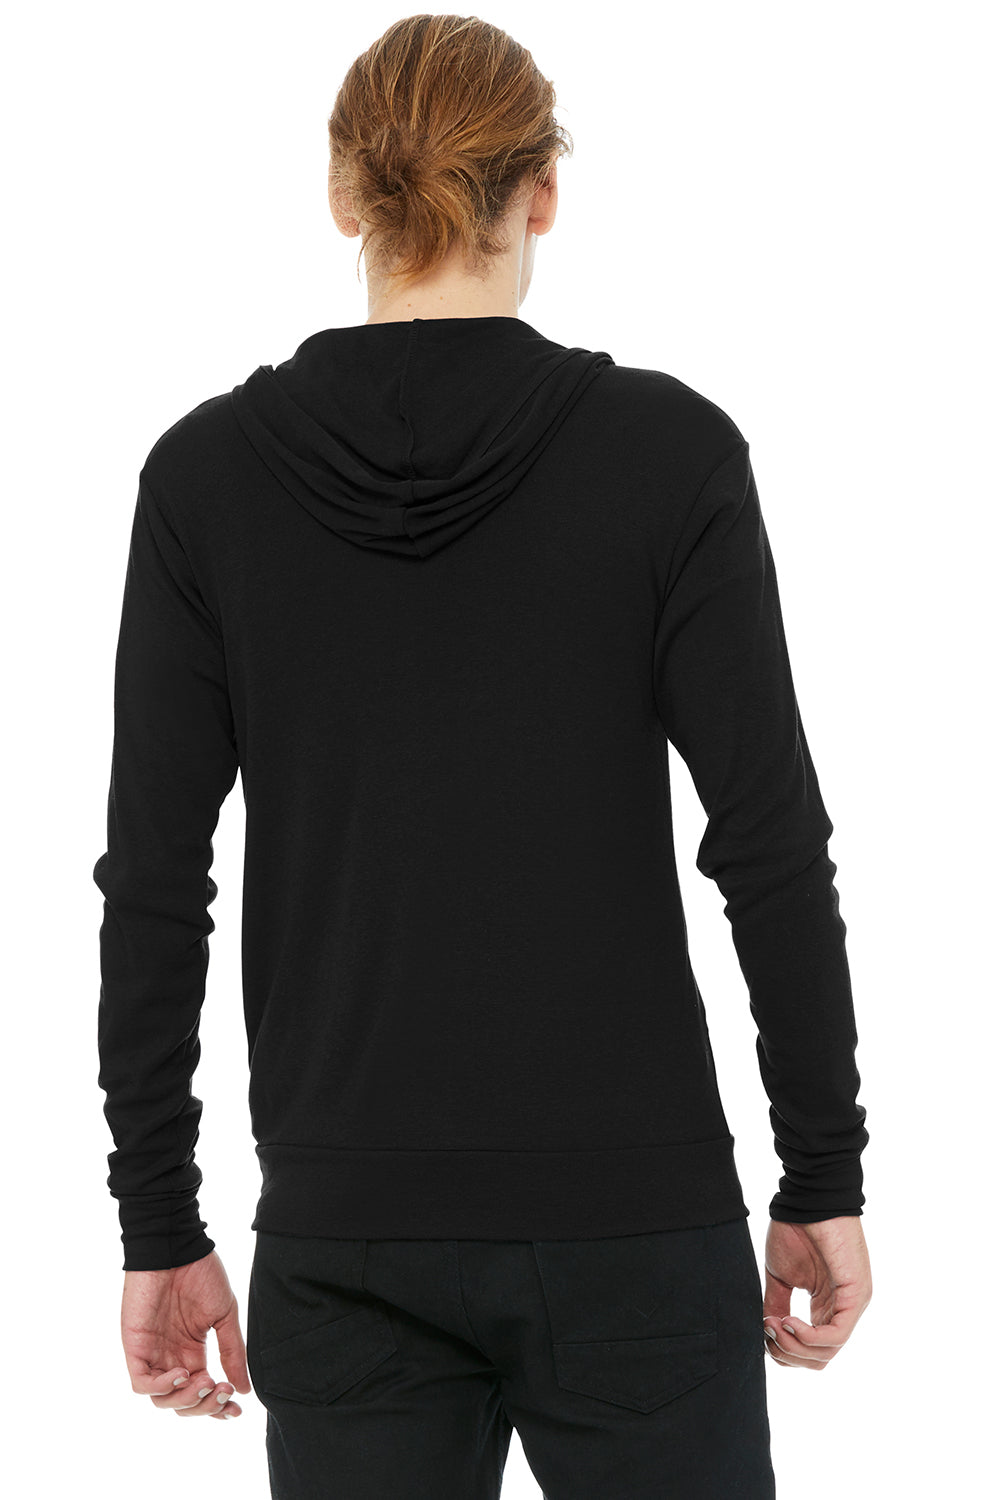 Bella + Canvas BC3939/3939 Mens Full Zip Long Sleeve Hooded T-Shirt Hoodie Solid Black Model Back